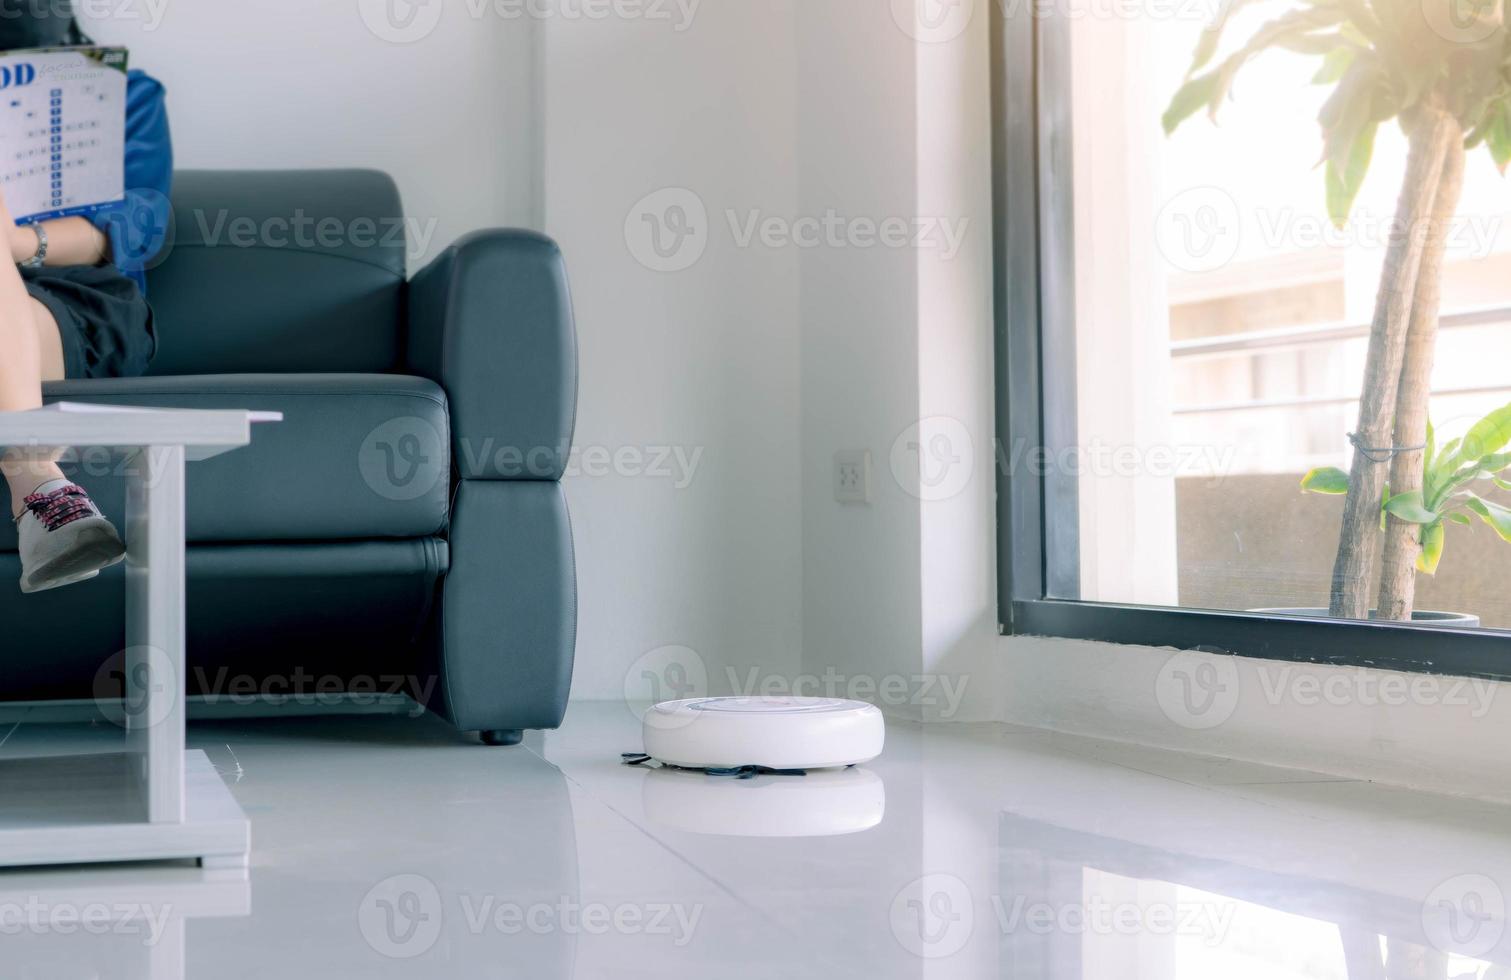 robô aspirador de pó limpando o chão na sala de estar. aspirador de pó robô branco para o conceito de casa inteligente. robô de limpeza para limpeza de piso. dispositivo wireless. tecnologia de limpeza inteligente. aparelho doméstico. foto